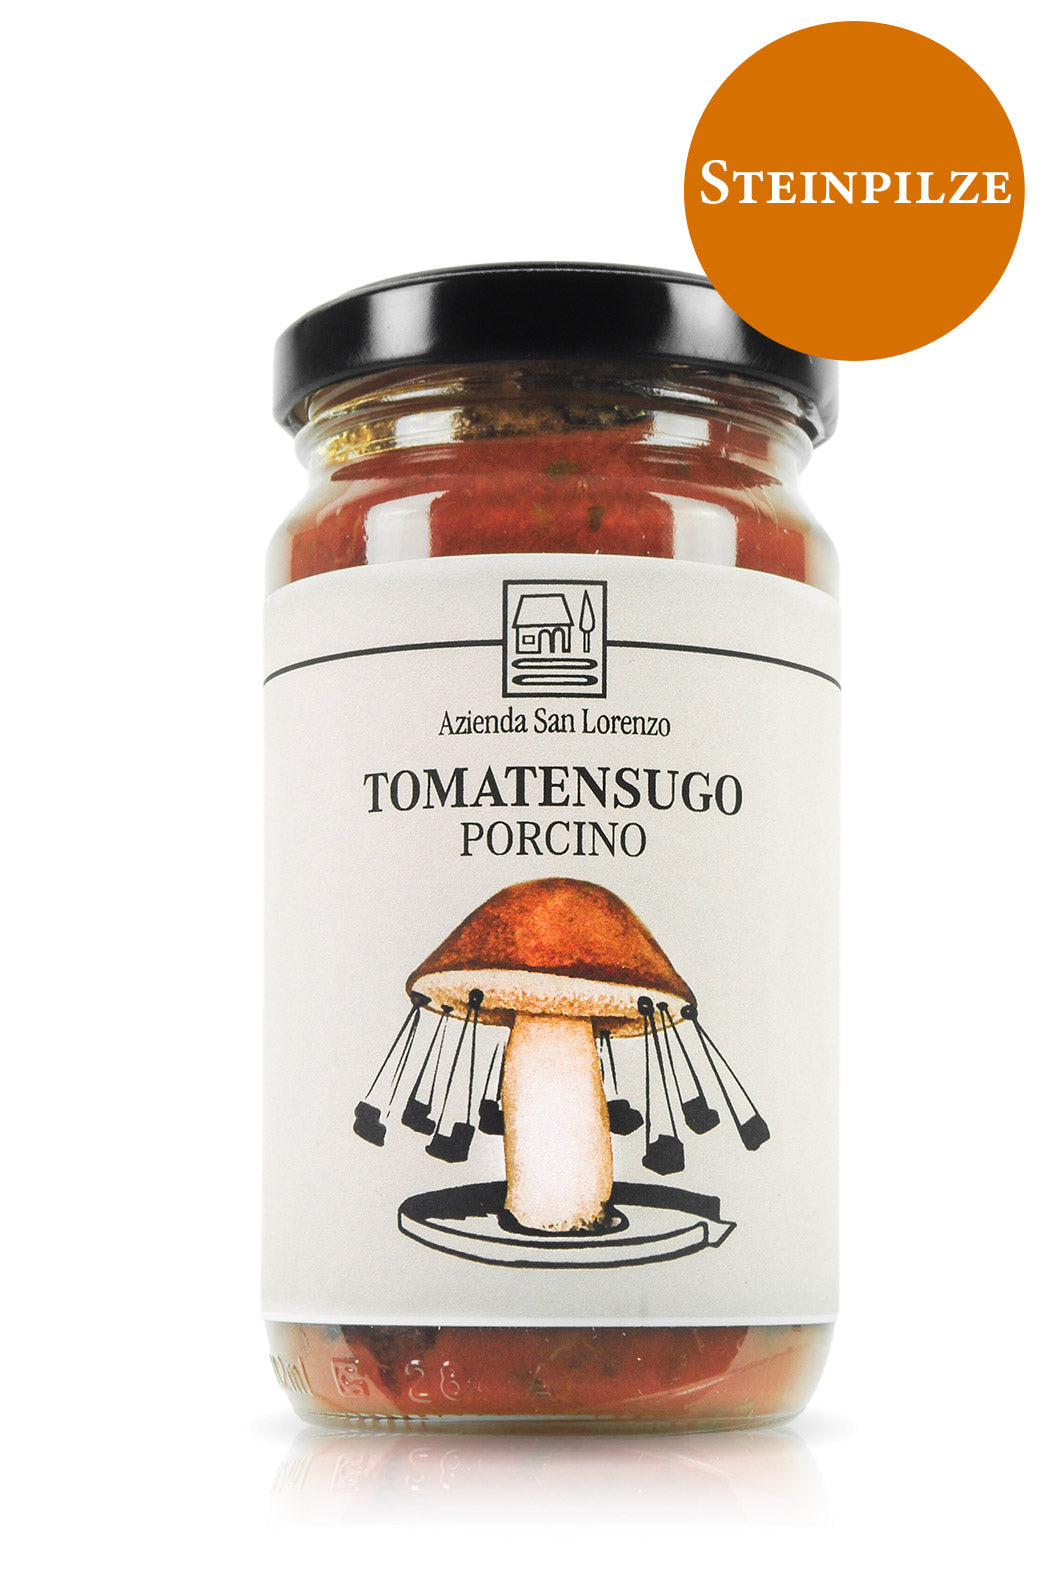 Tomatensauce mit Steinpilzen Porcini aus Italien kaufen Feinkost